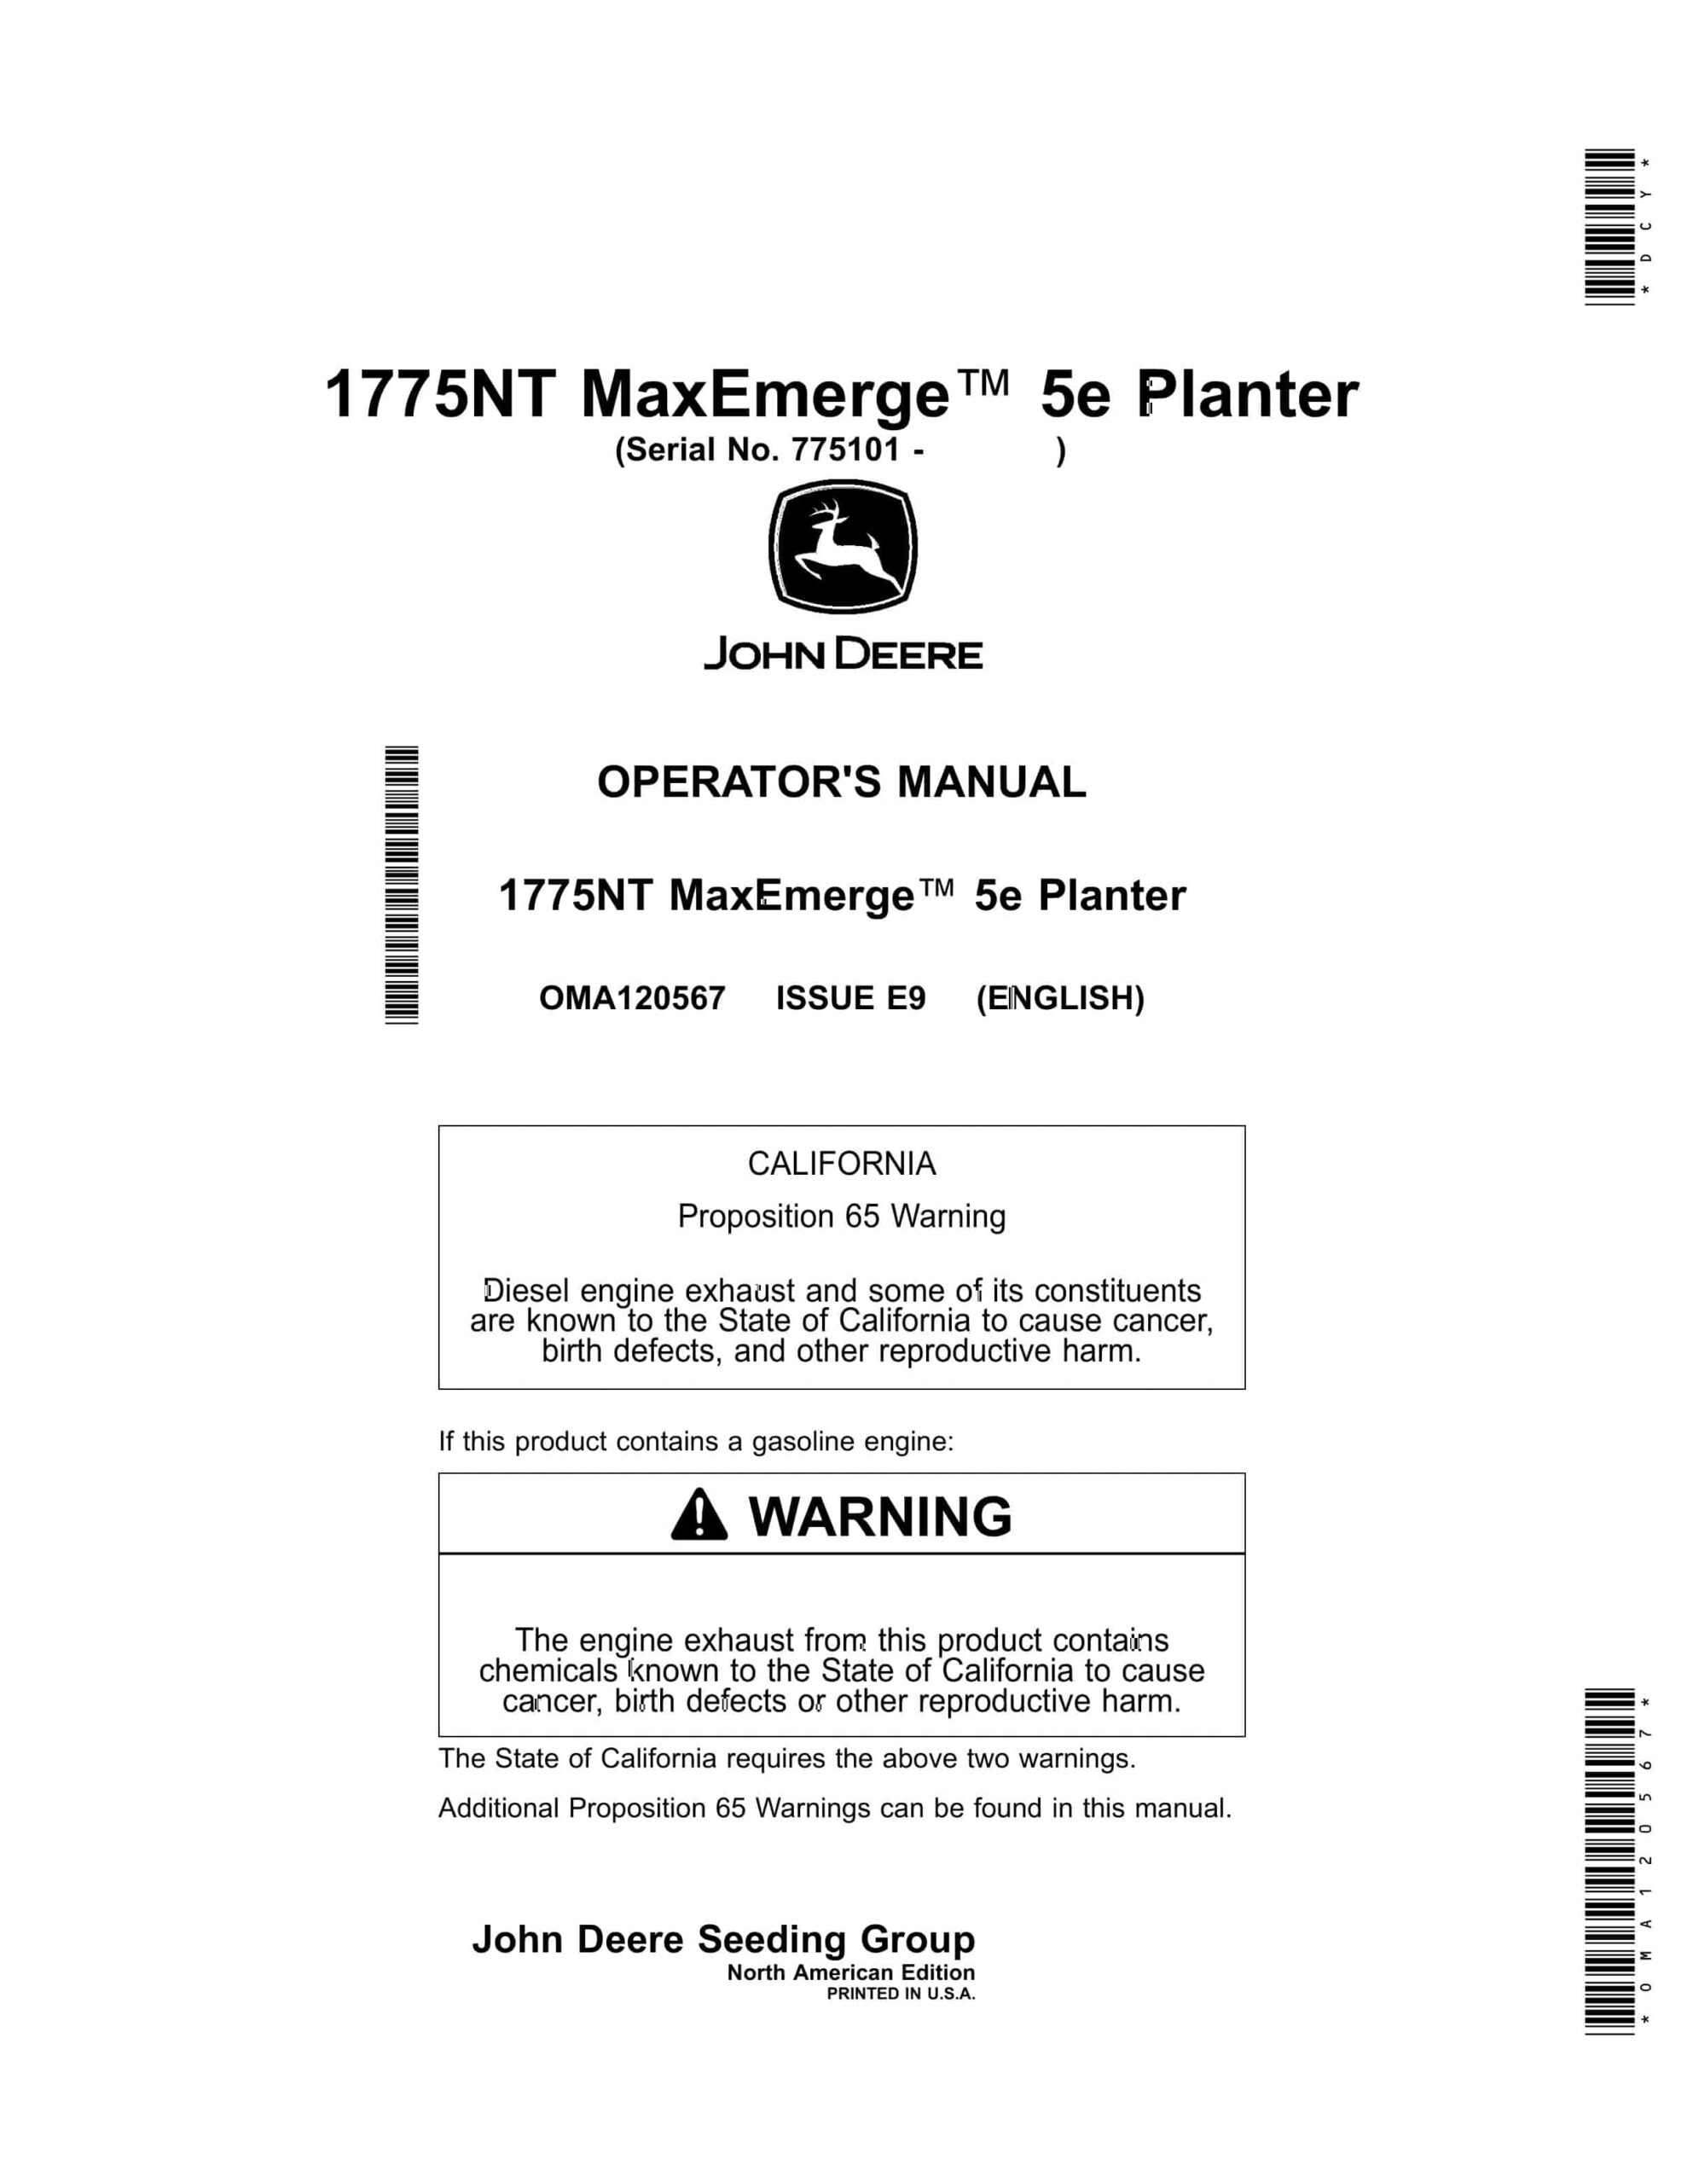 John Deere 1775NT MaxEmerge 5e Planter Operator Manual OMA120567-1